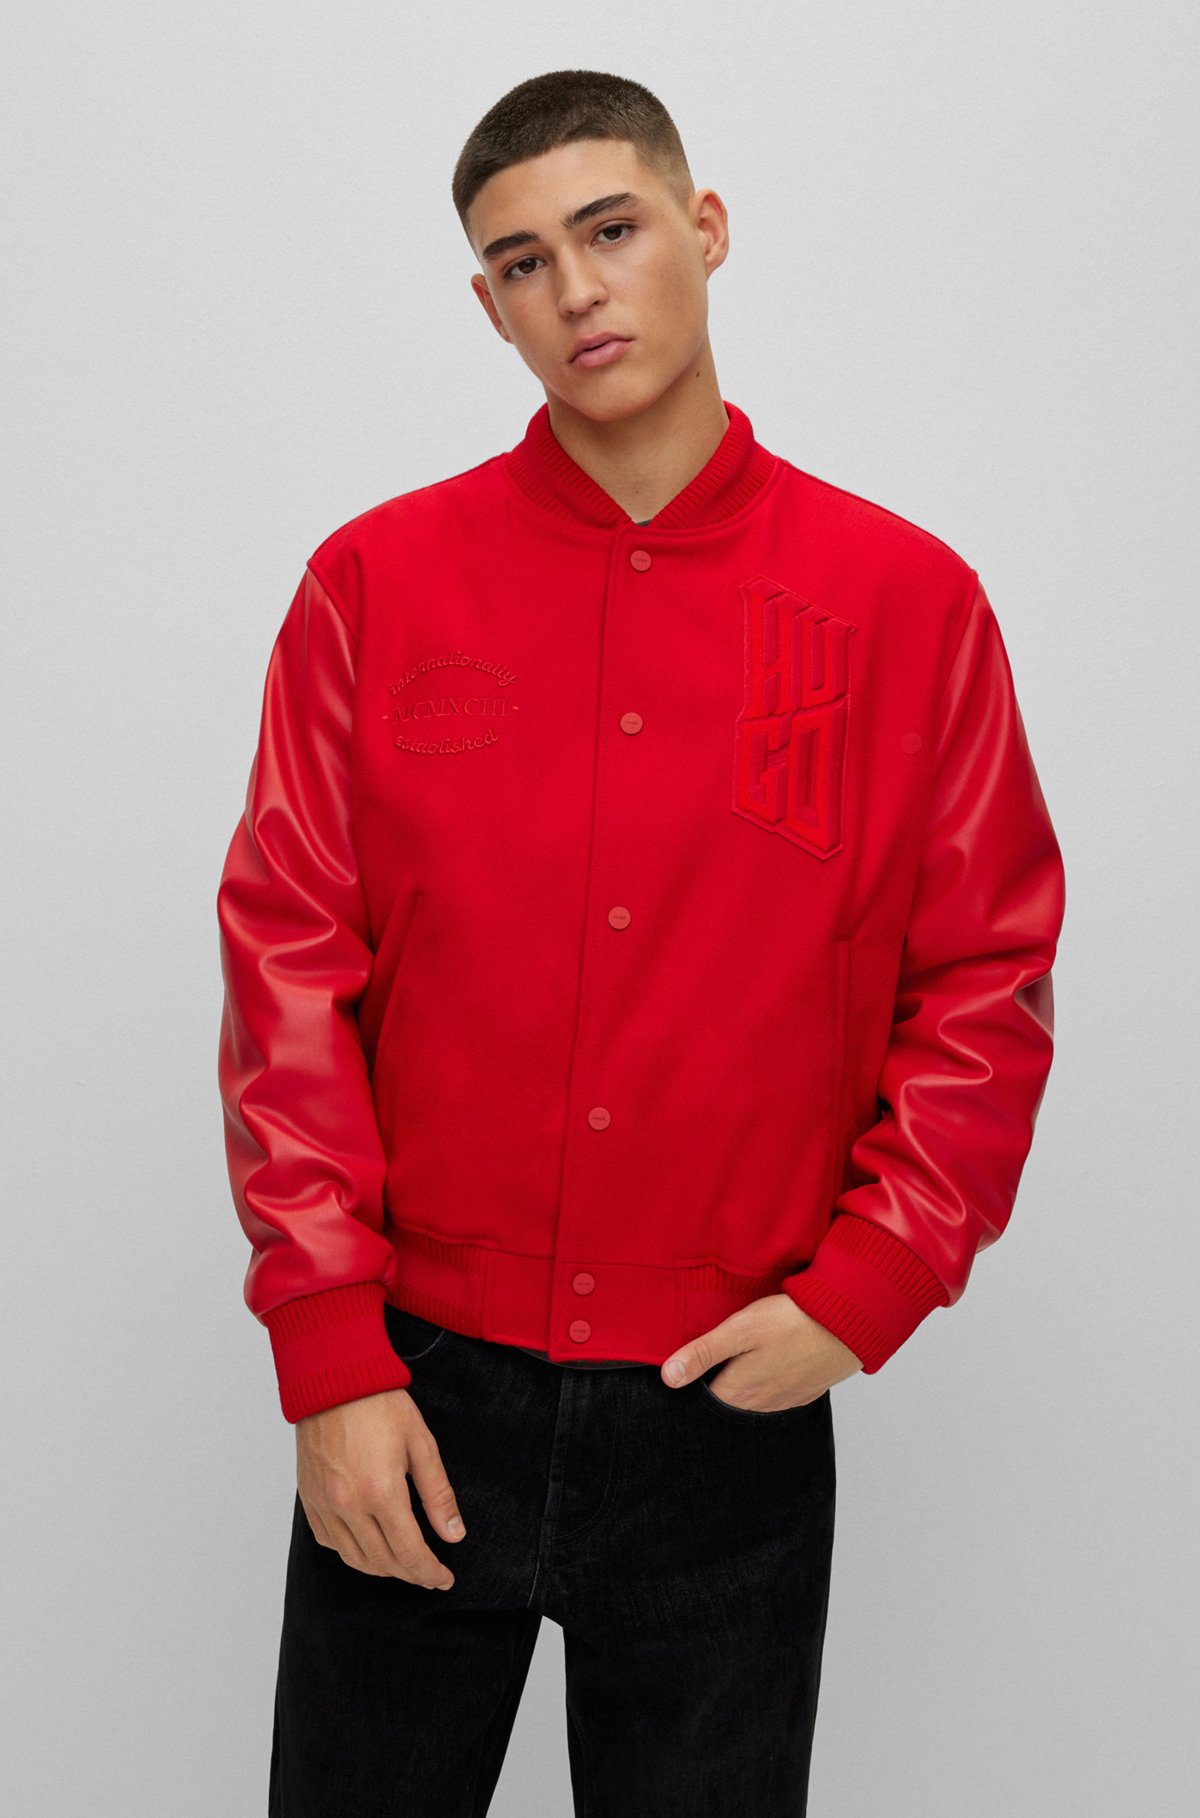 red jacket yankees shirt